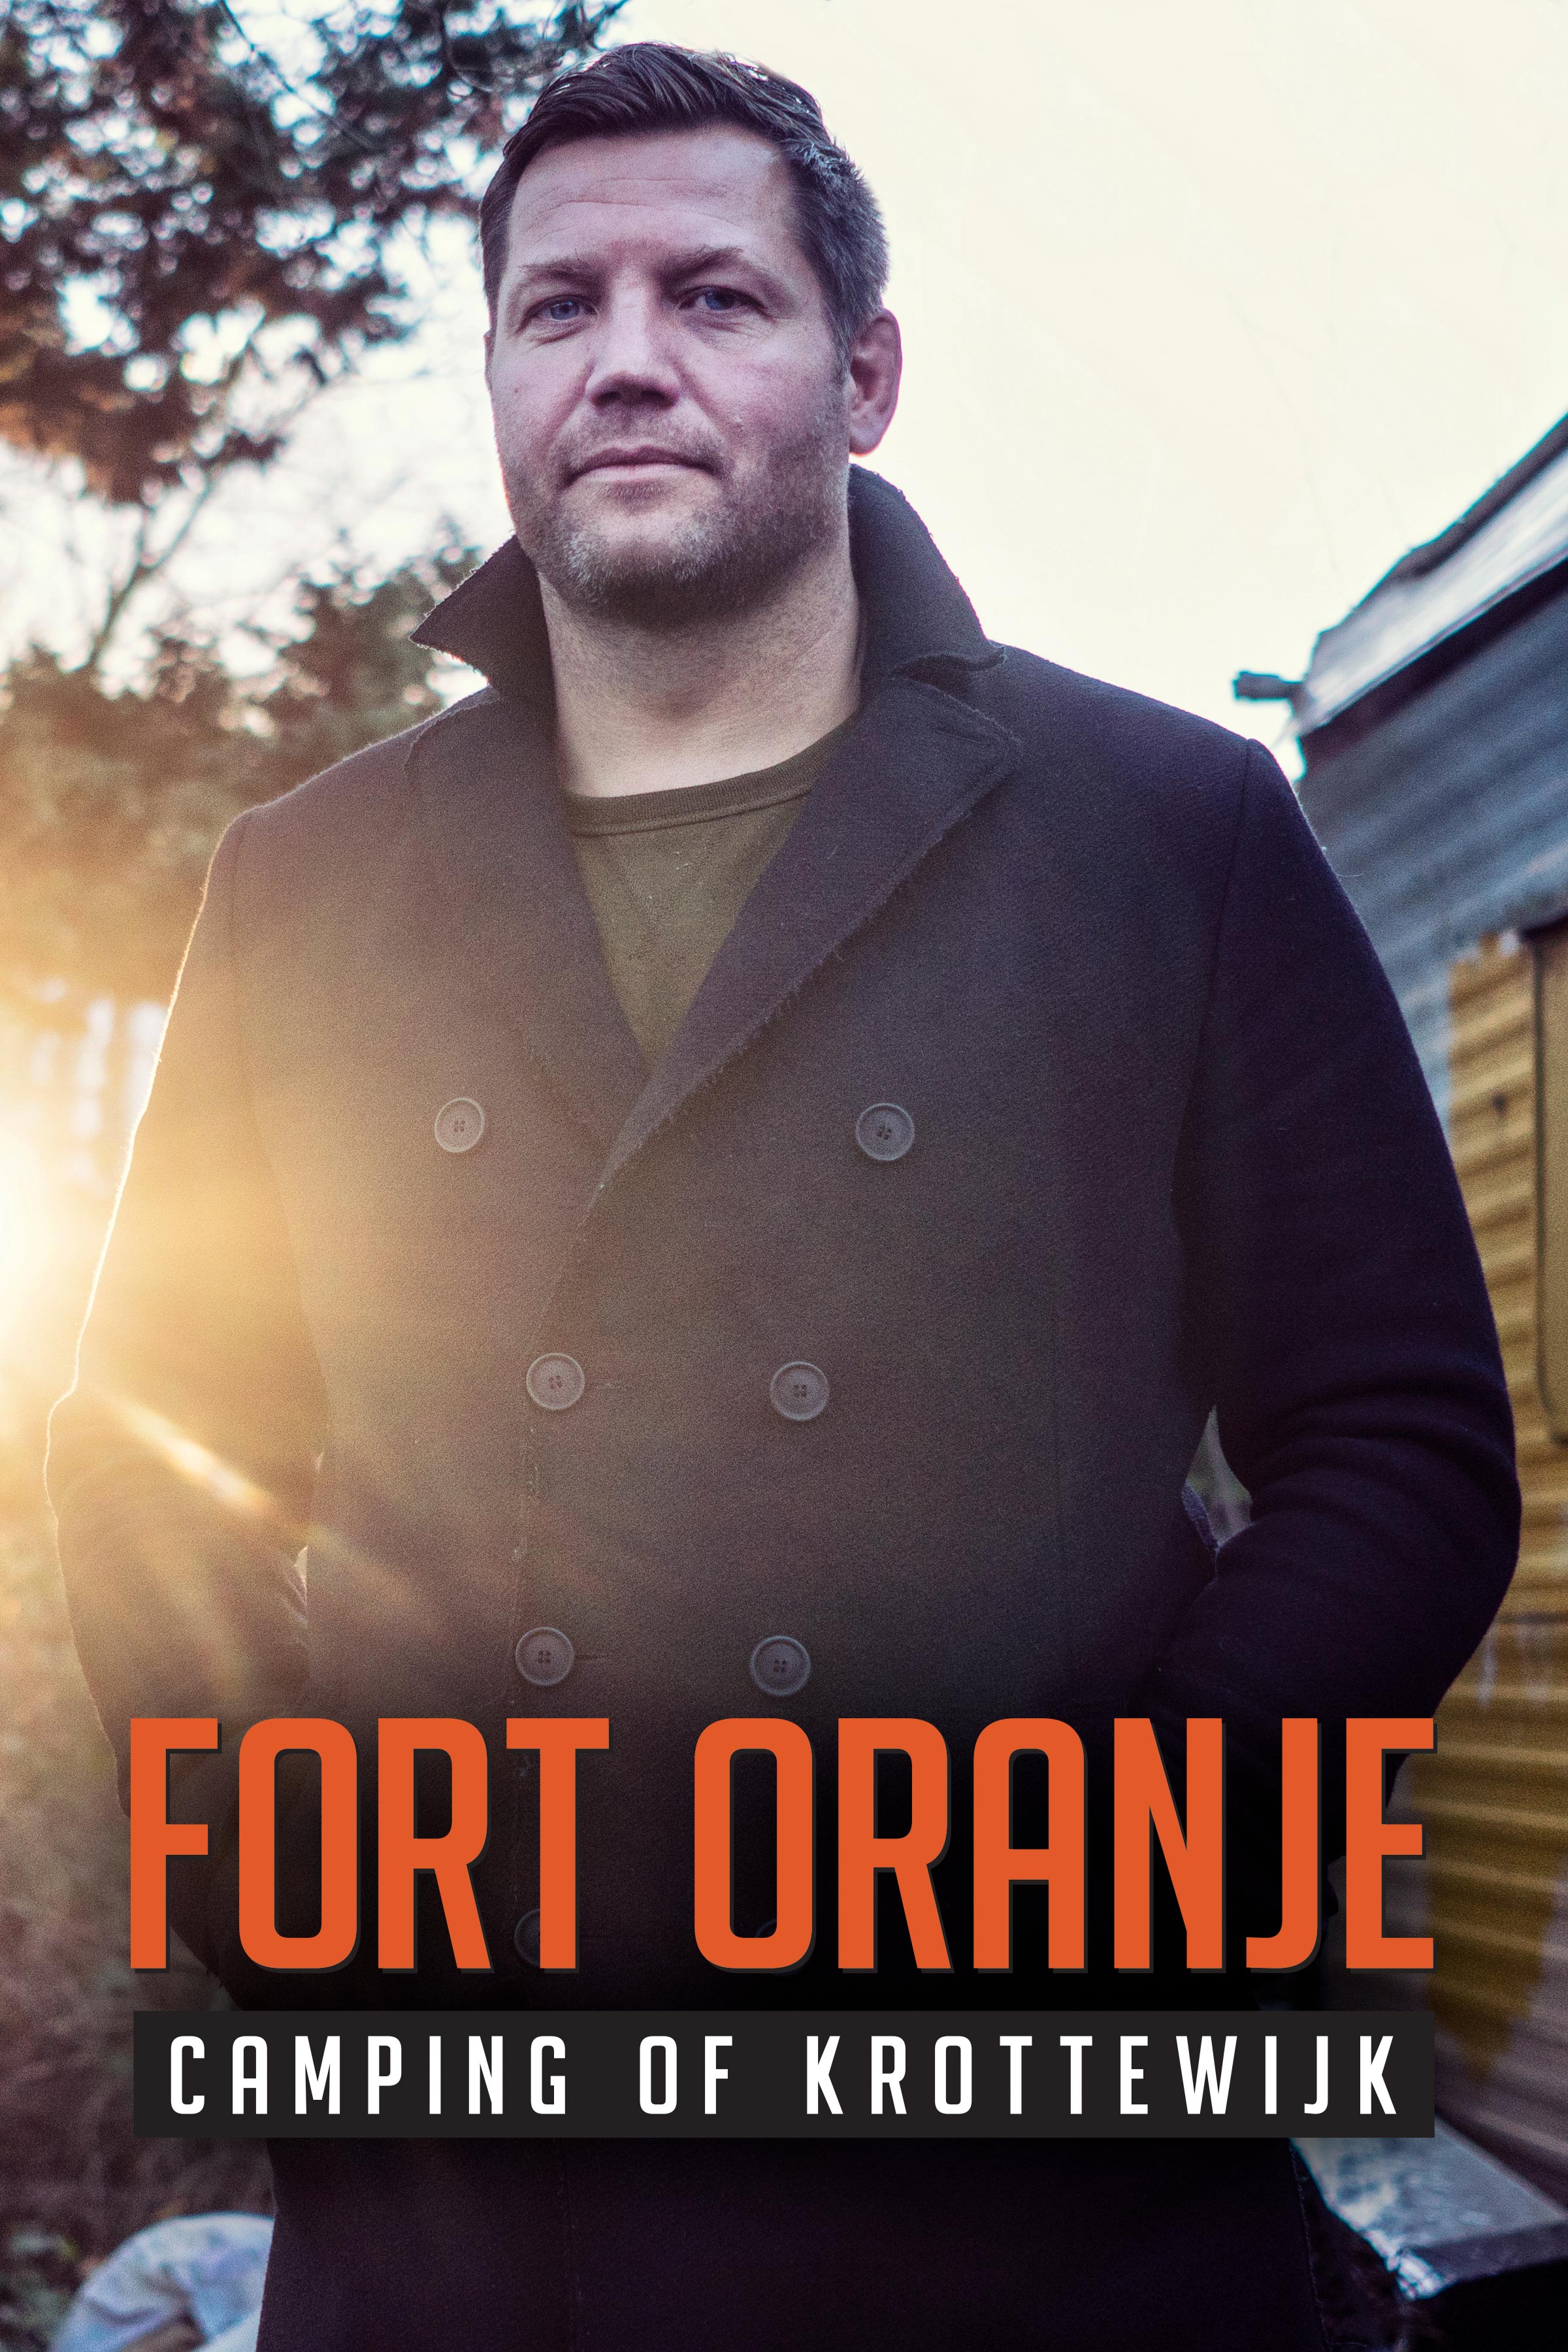 |NL| Fort Oranje: krottenwijk of camping